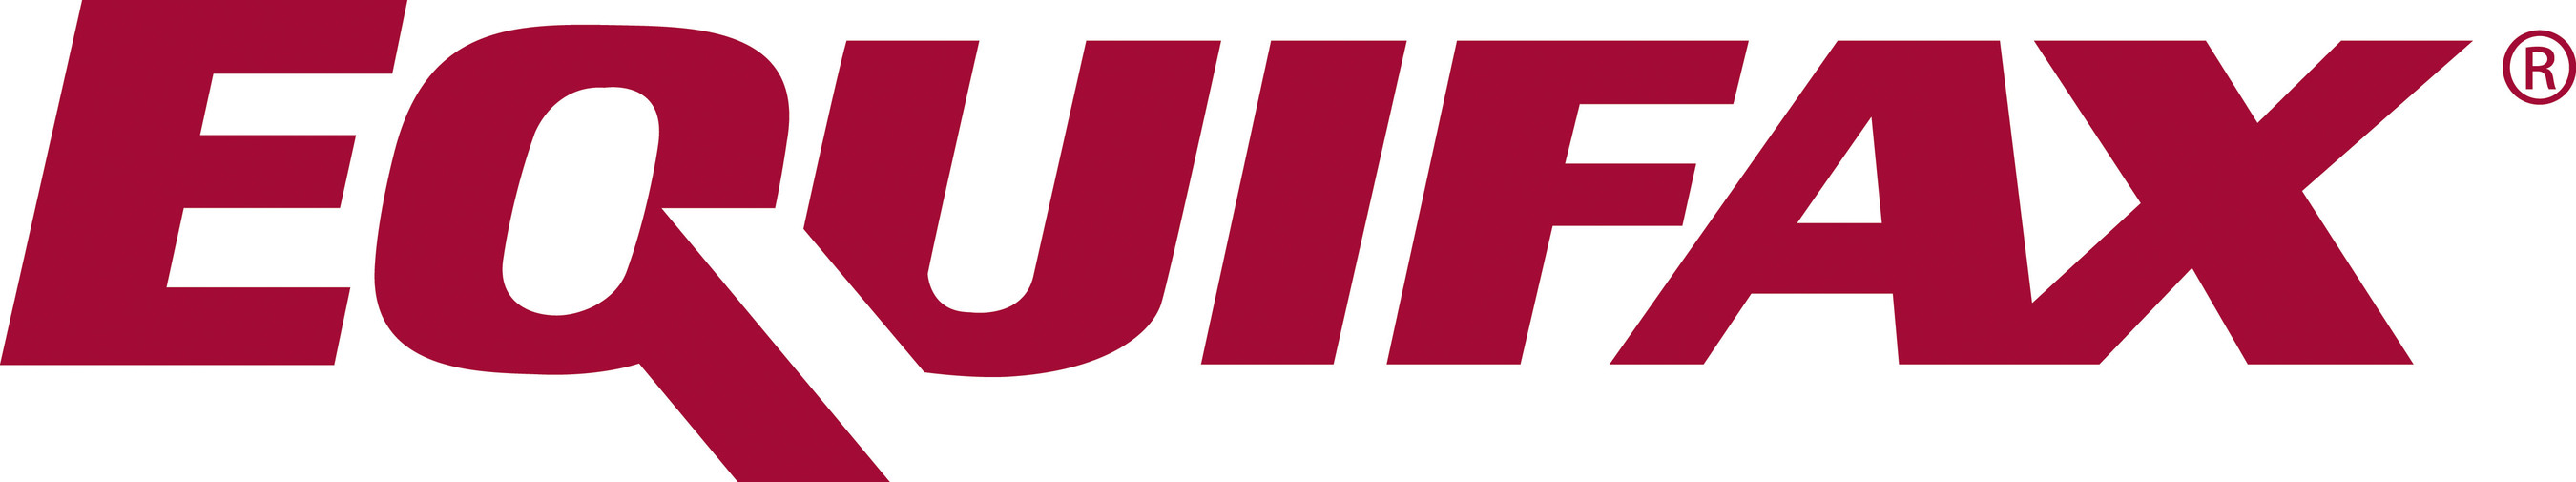 Equifax Inc. logo.